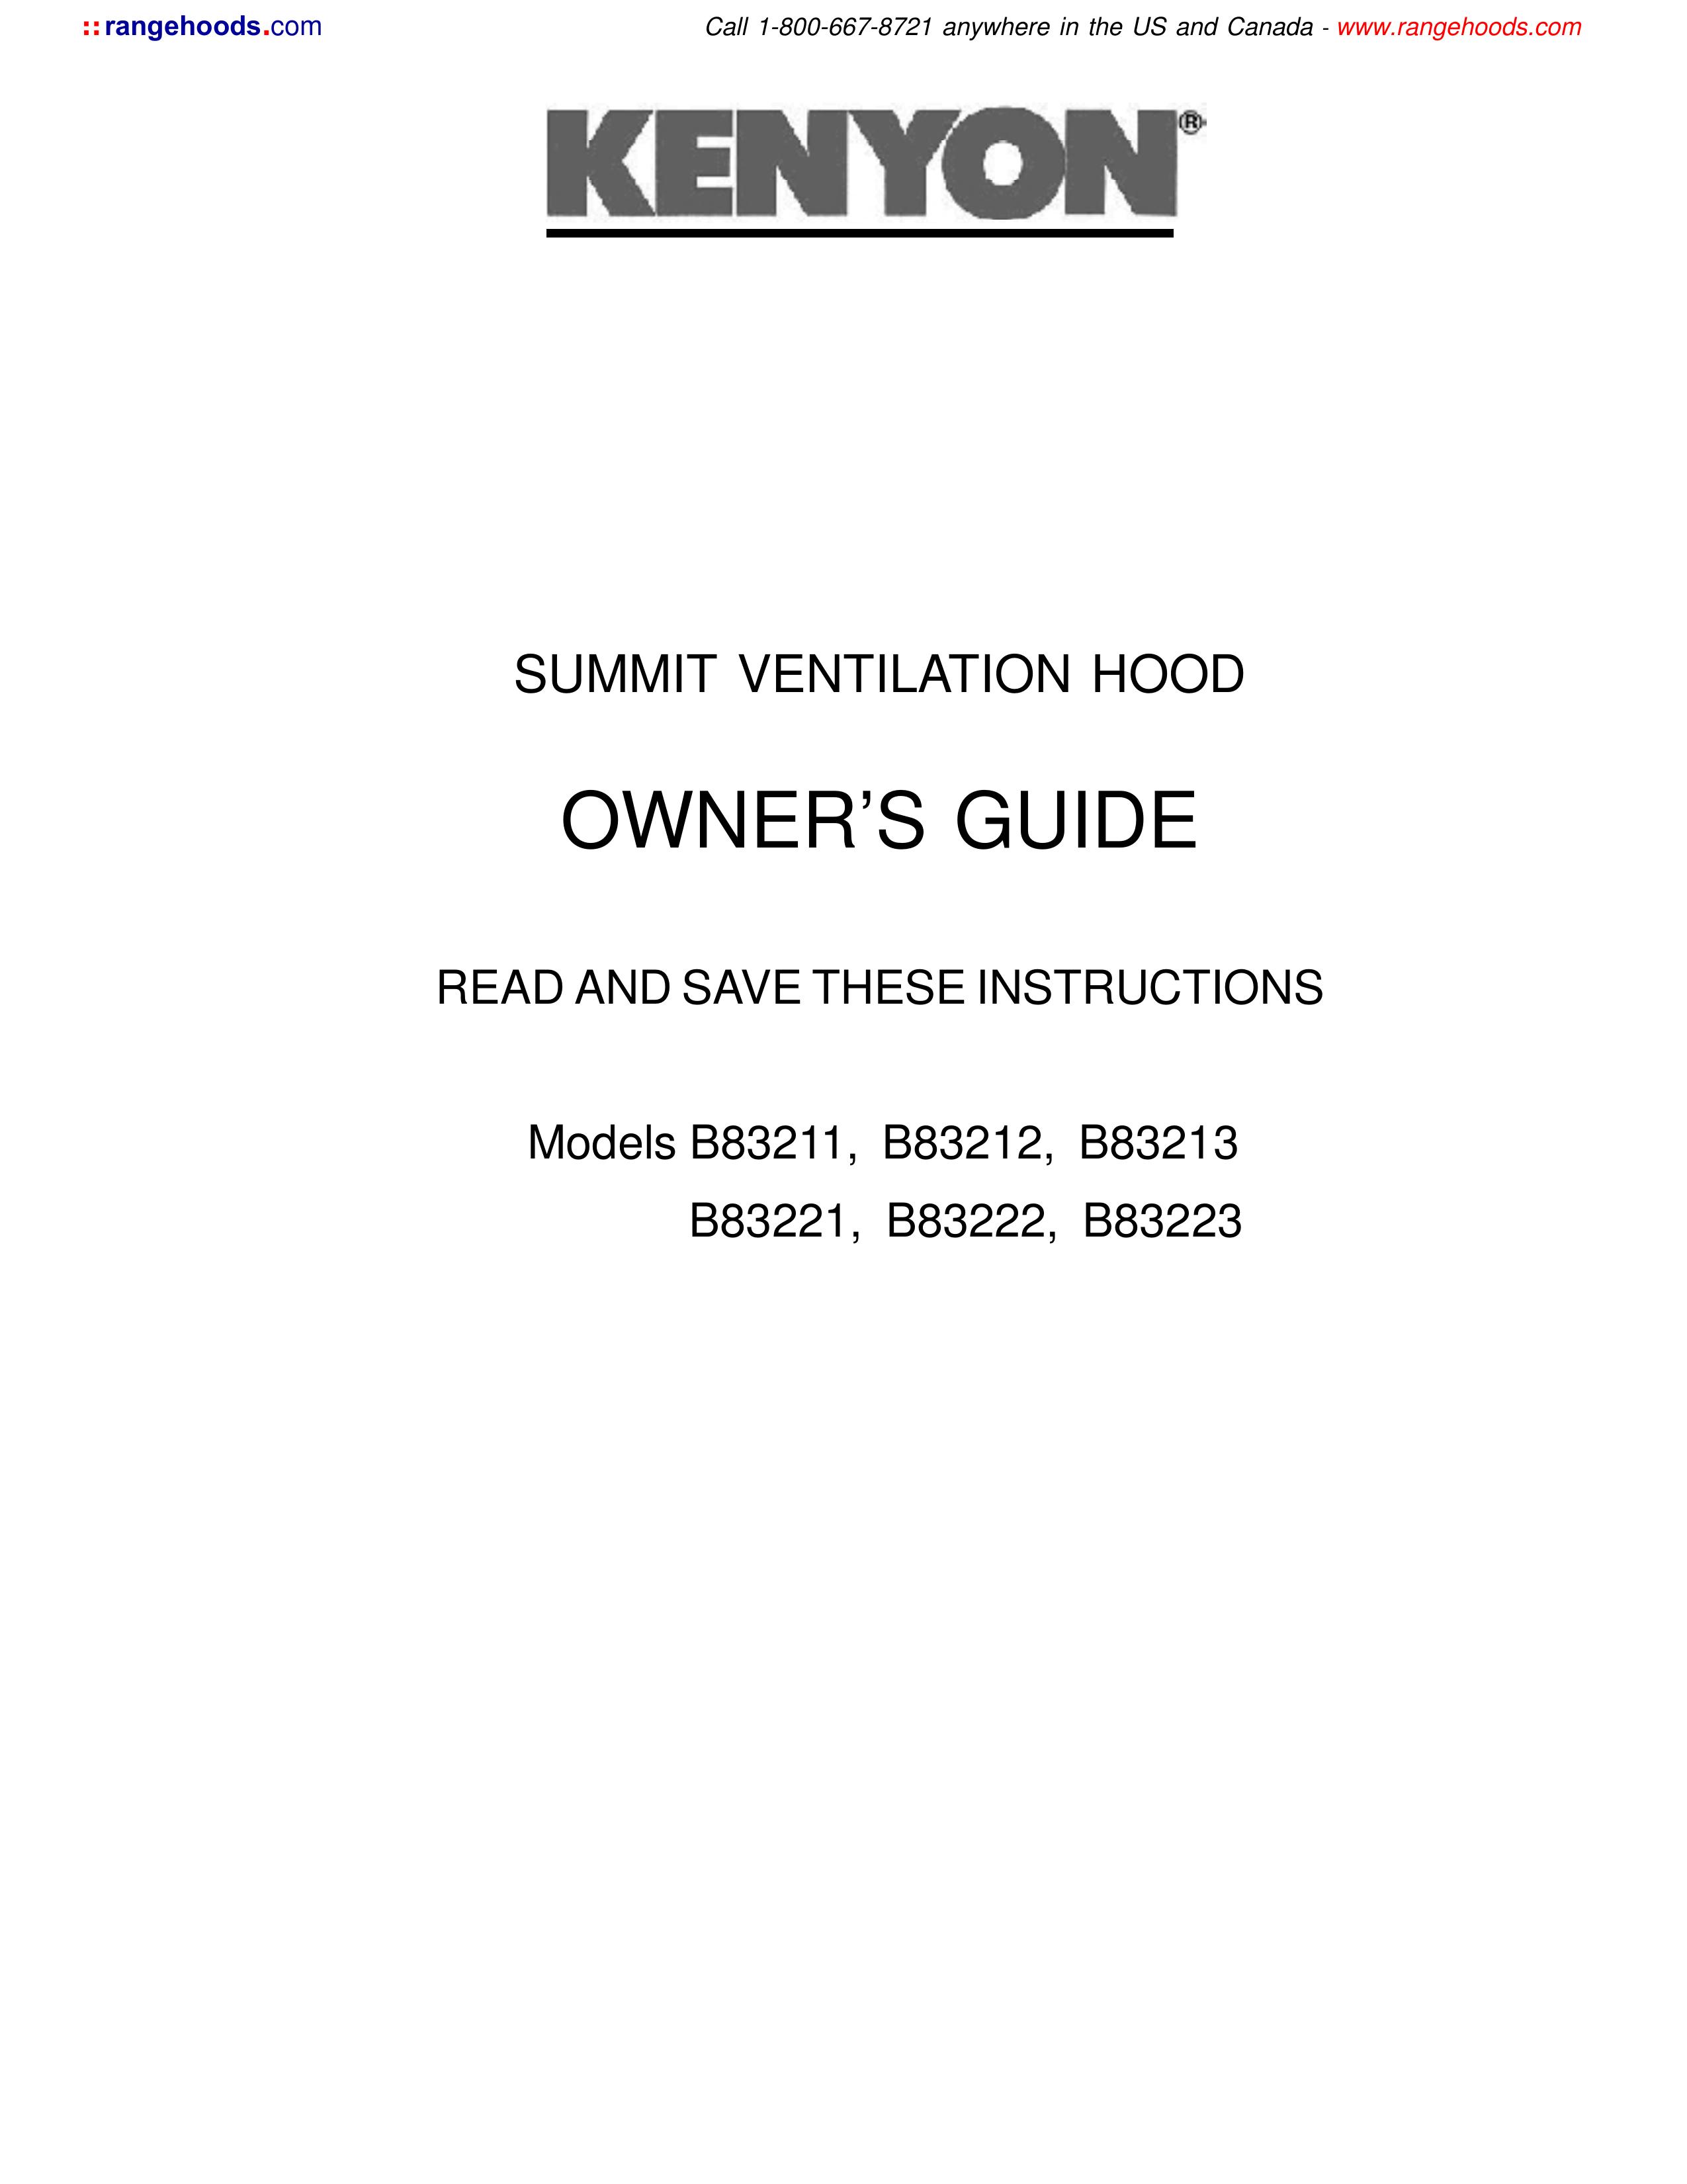 Kenyon B83213 Ventilation Hood User Manual